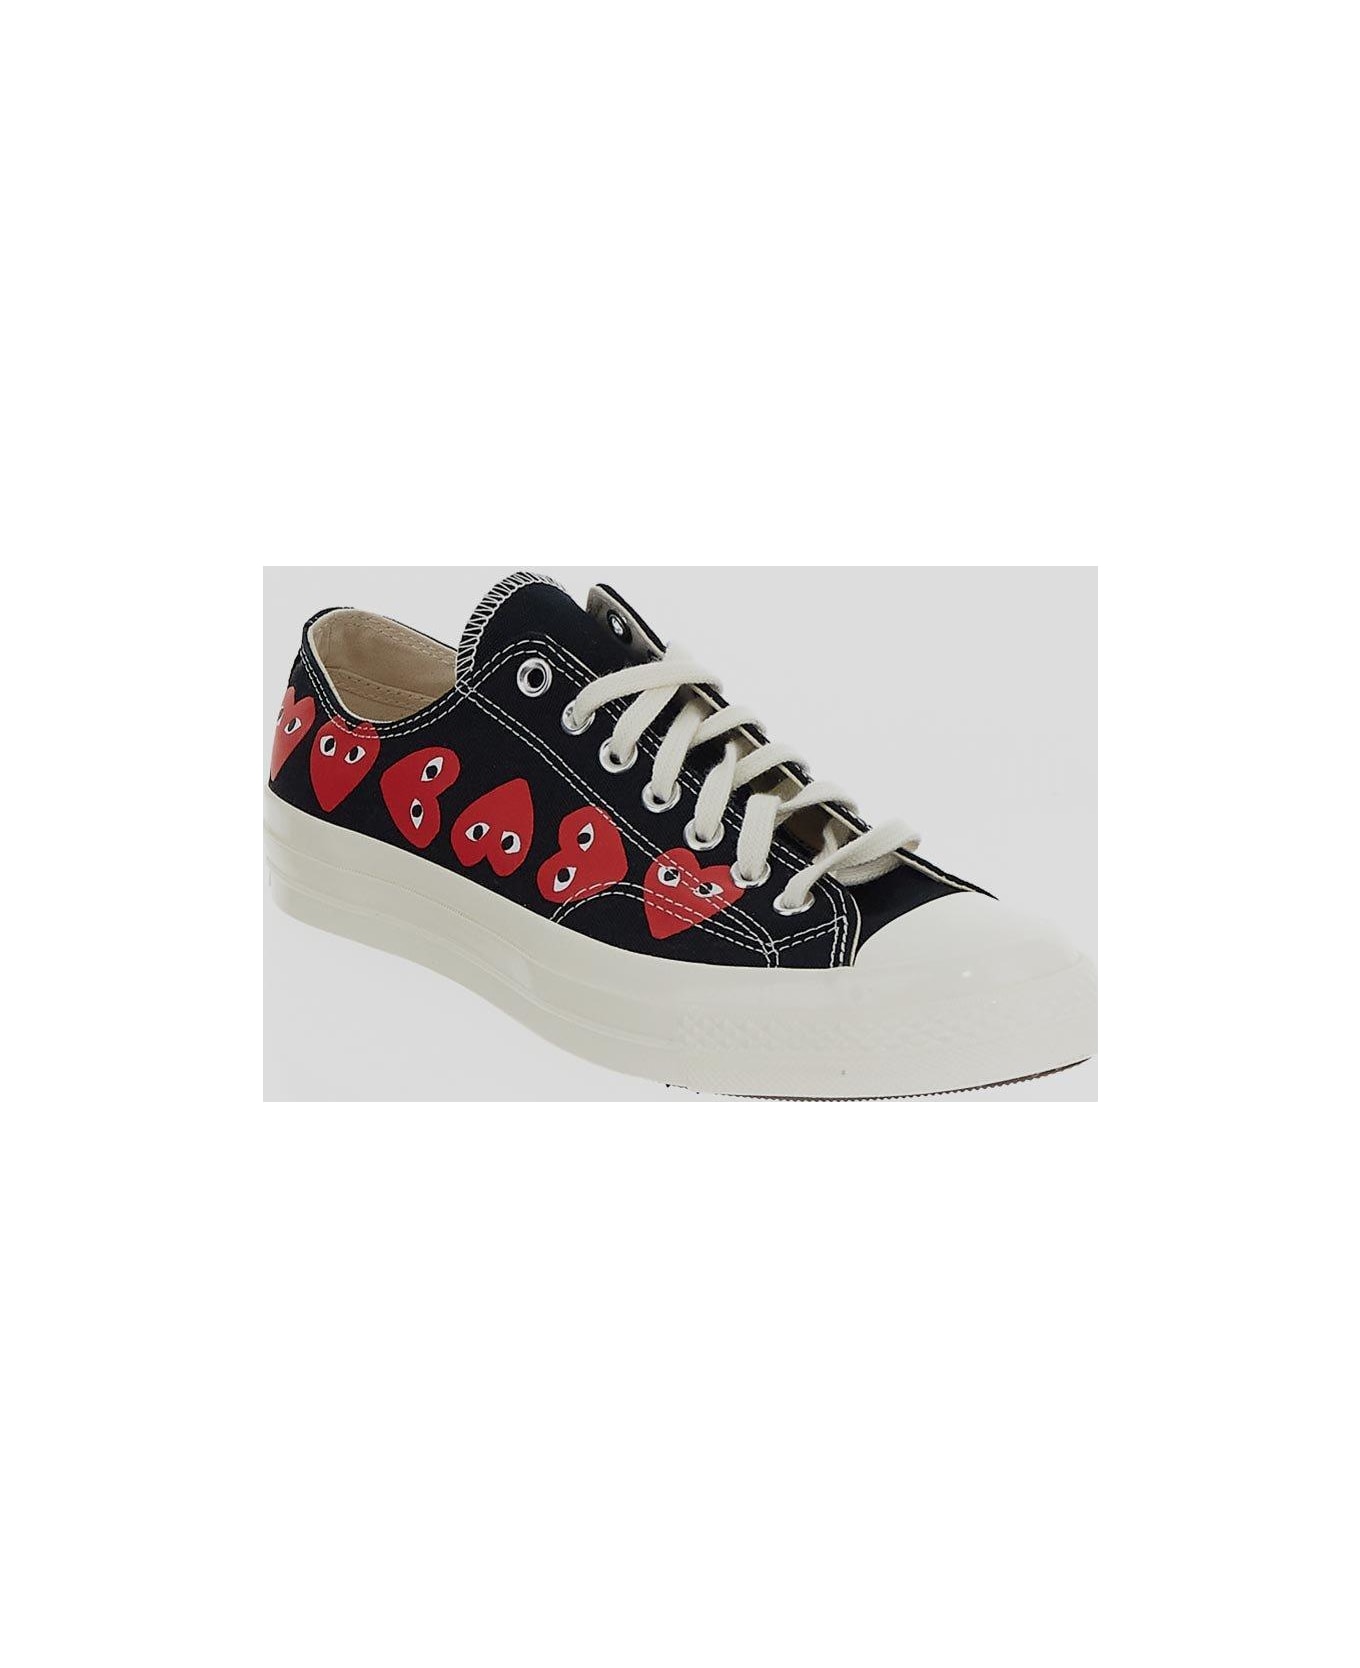 Comme des Garçons X Converse Chuck 70 Heart Printed Lace-up Sneakers - Black スニーカー